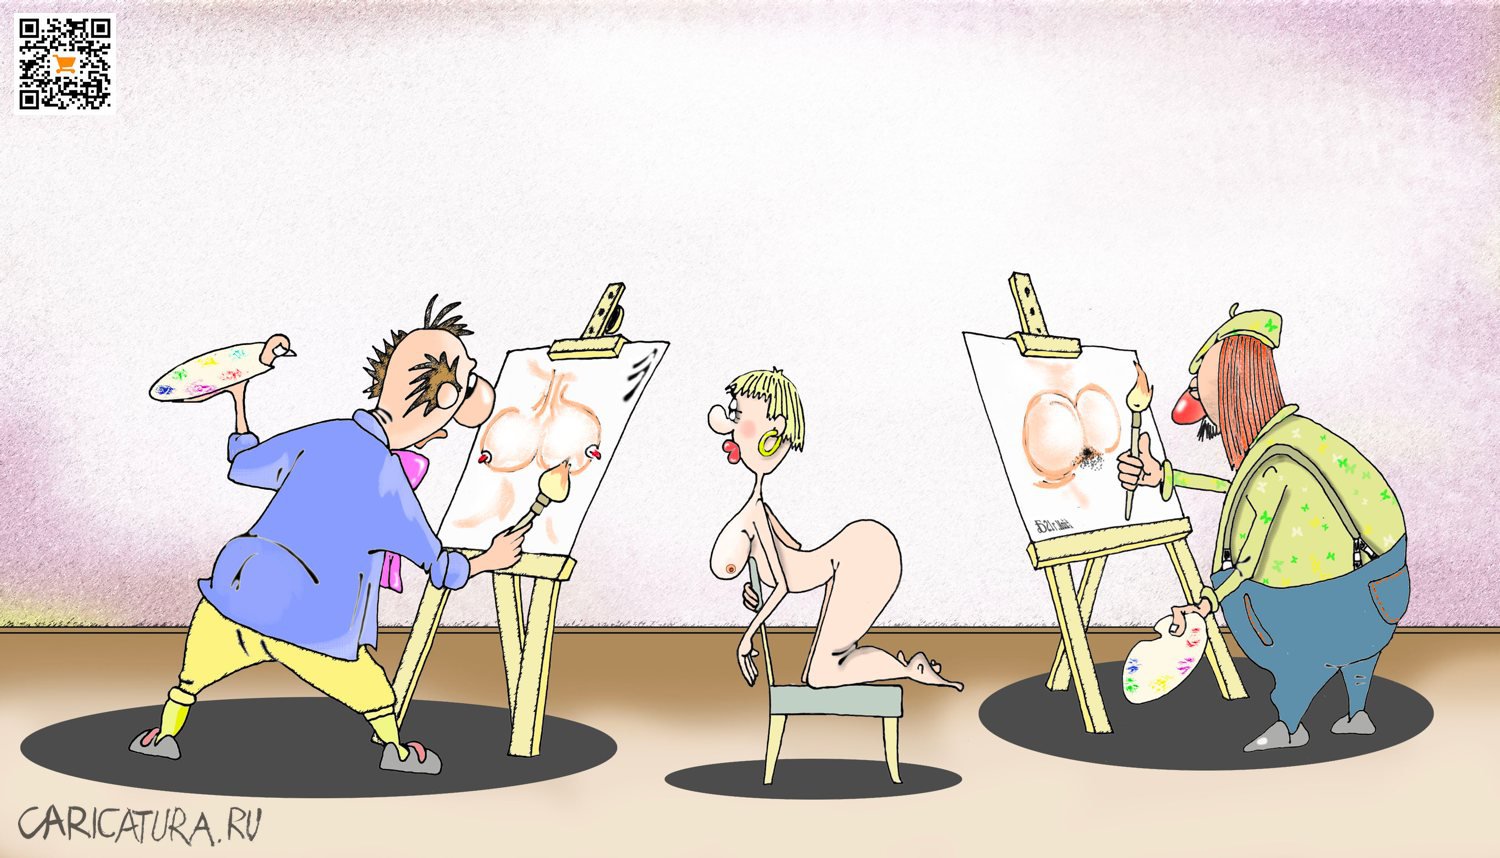 Карикатура "Про сюрреализм", Борис Демин